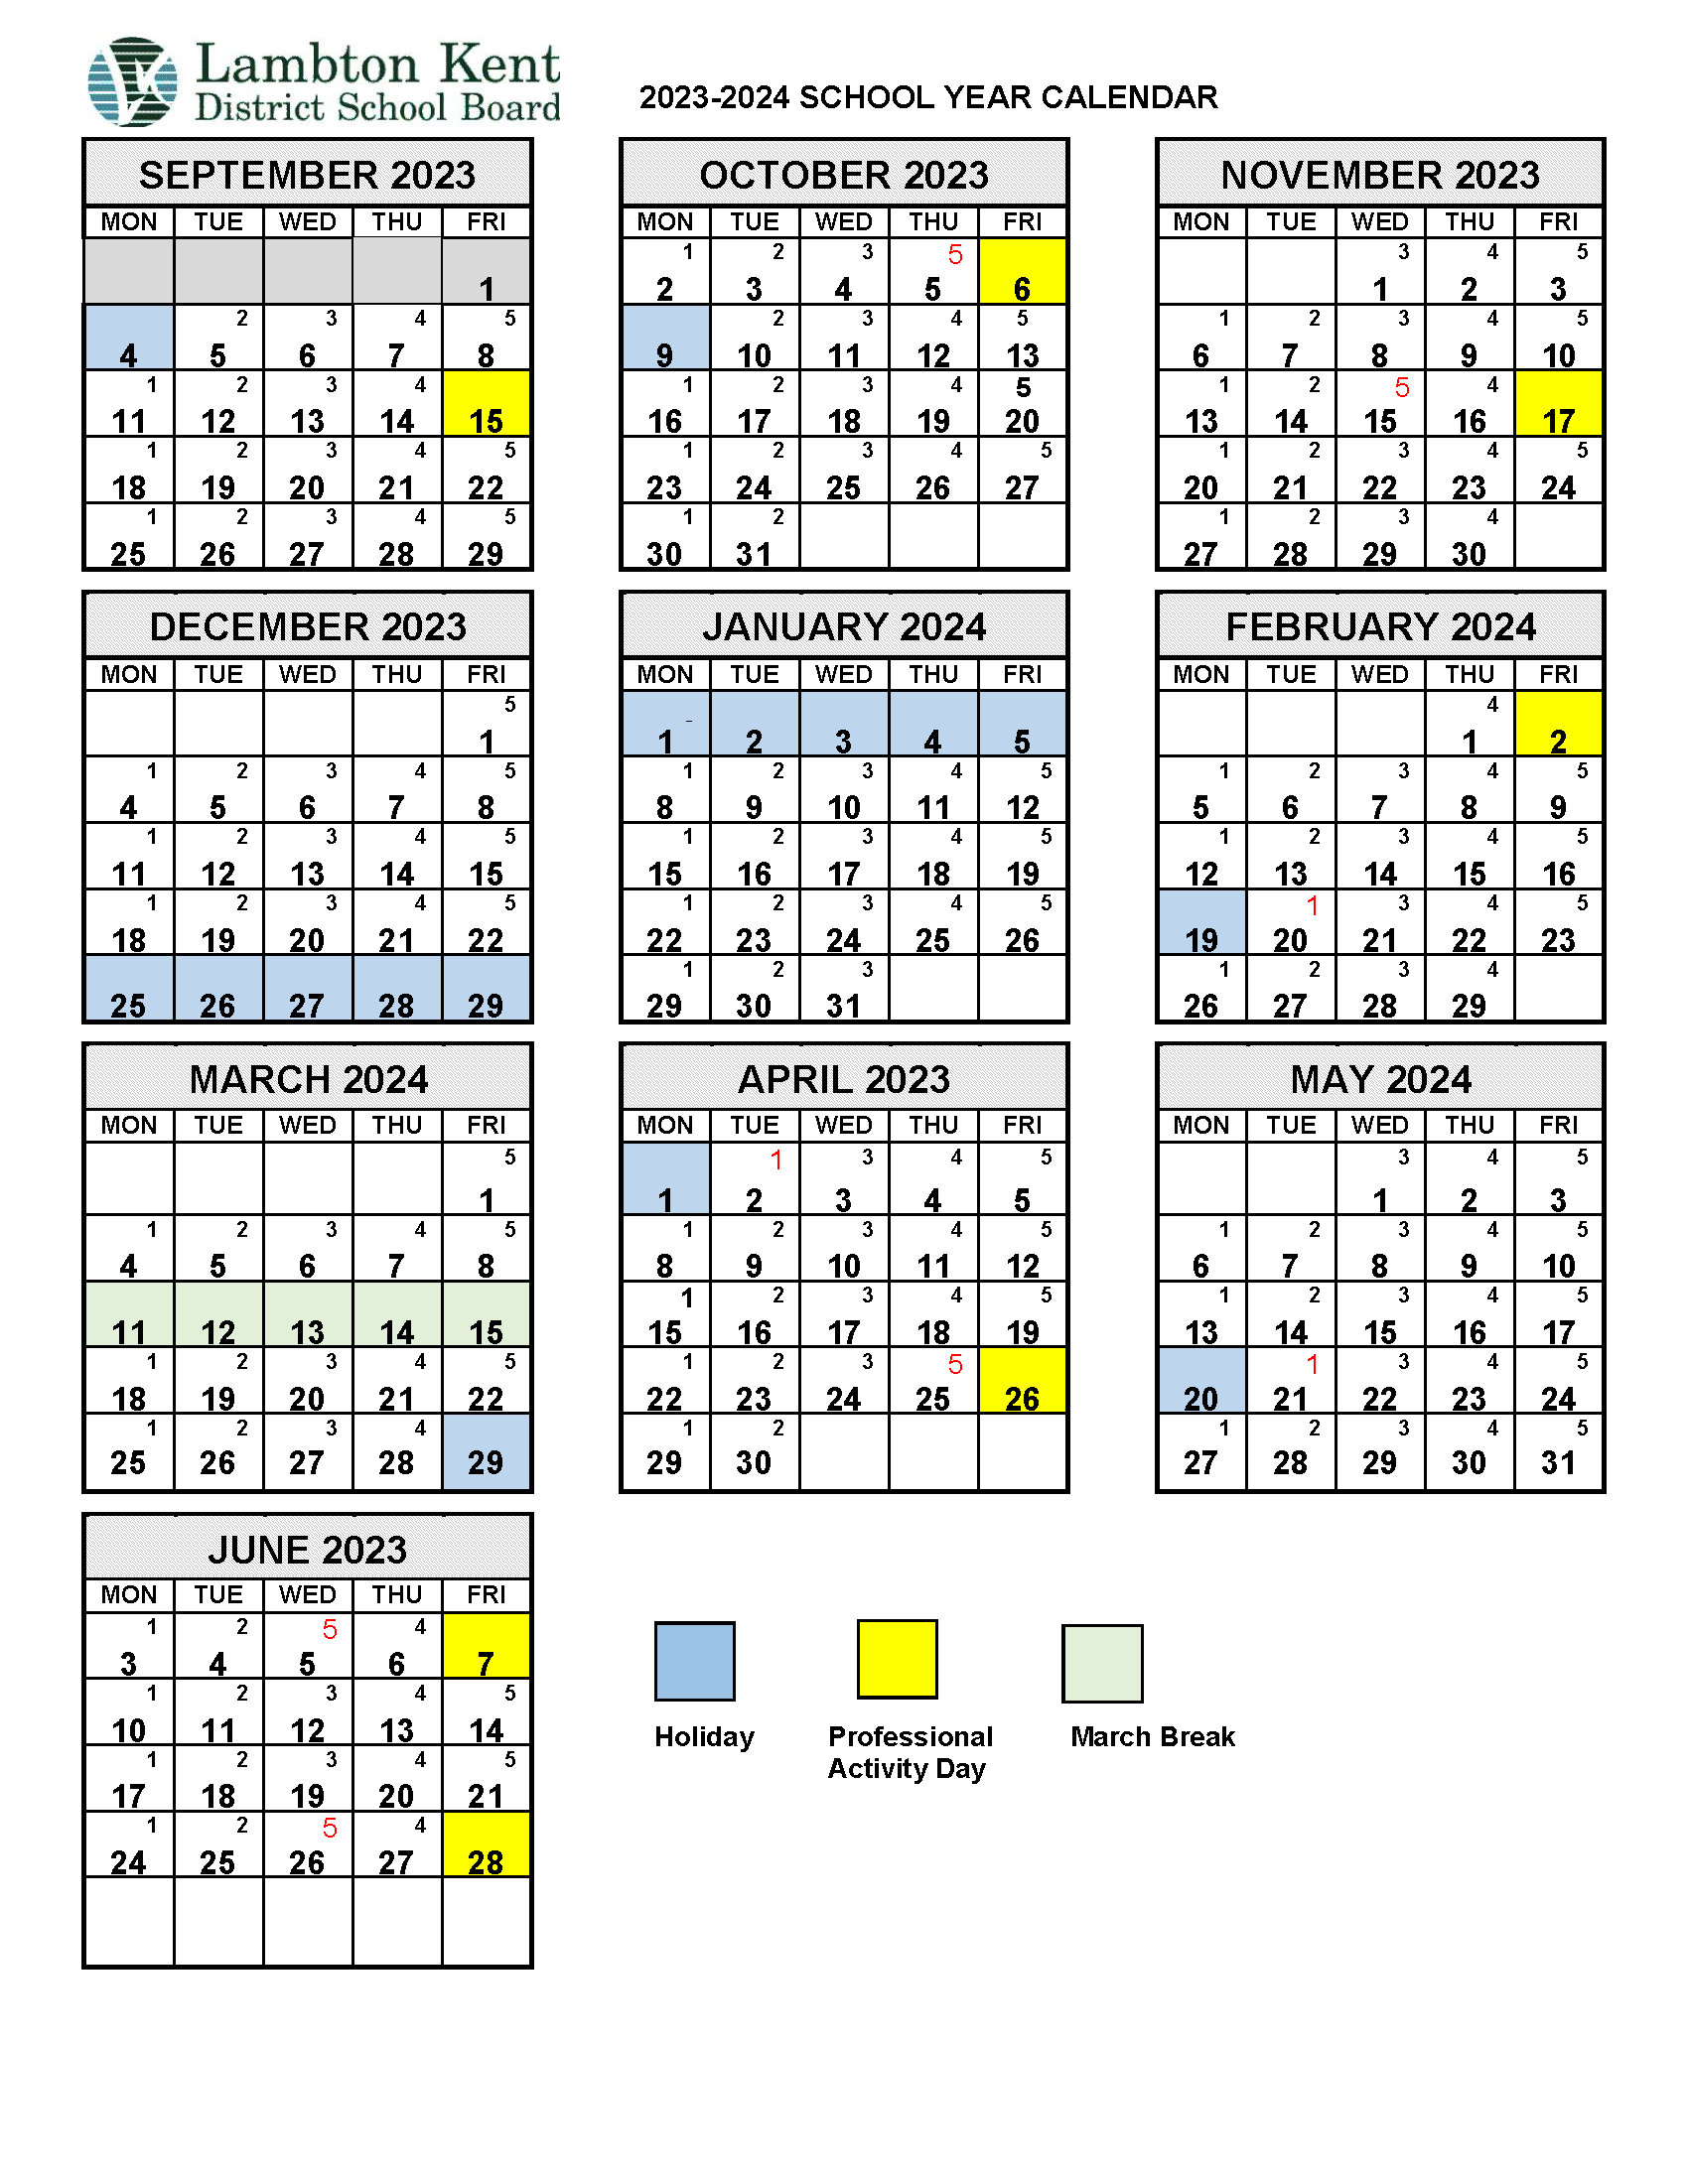 Pps Calendar 2022 2023 Elementary Calendar - Lambton Kent District School Board